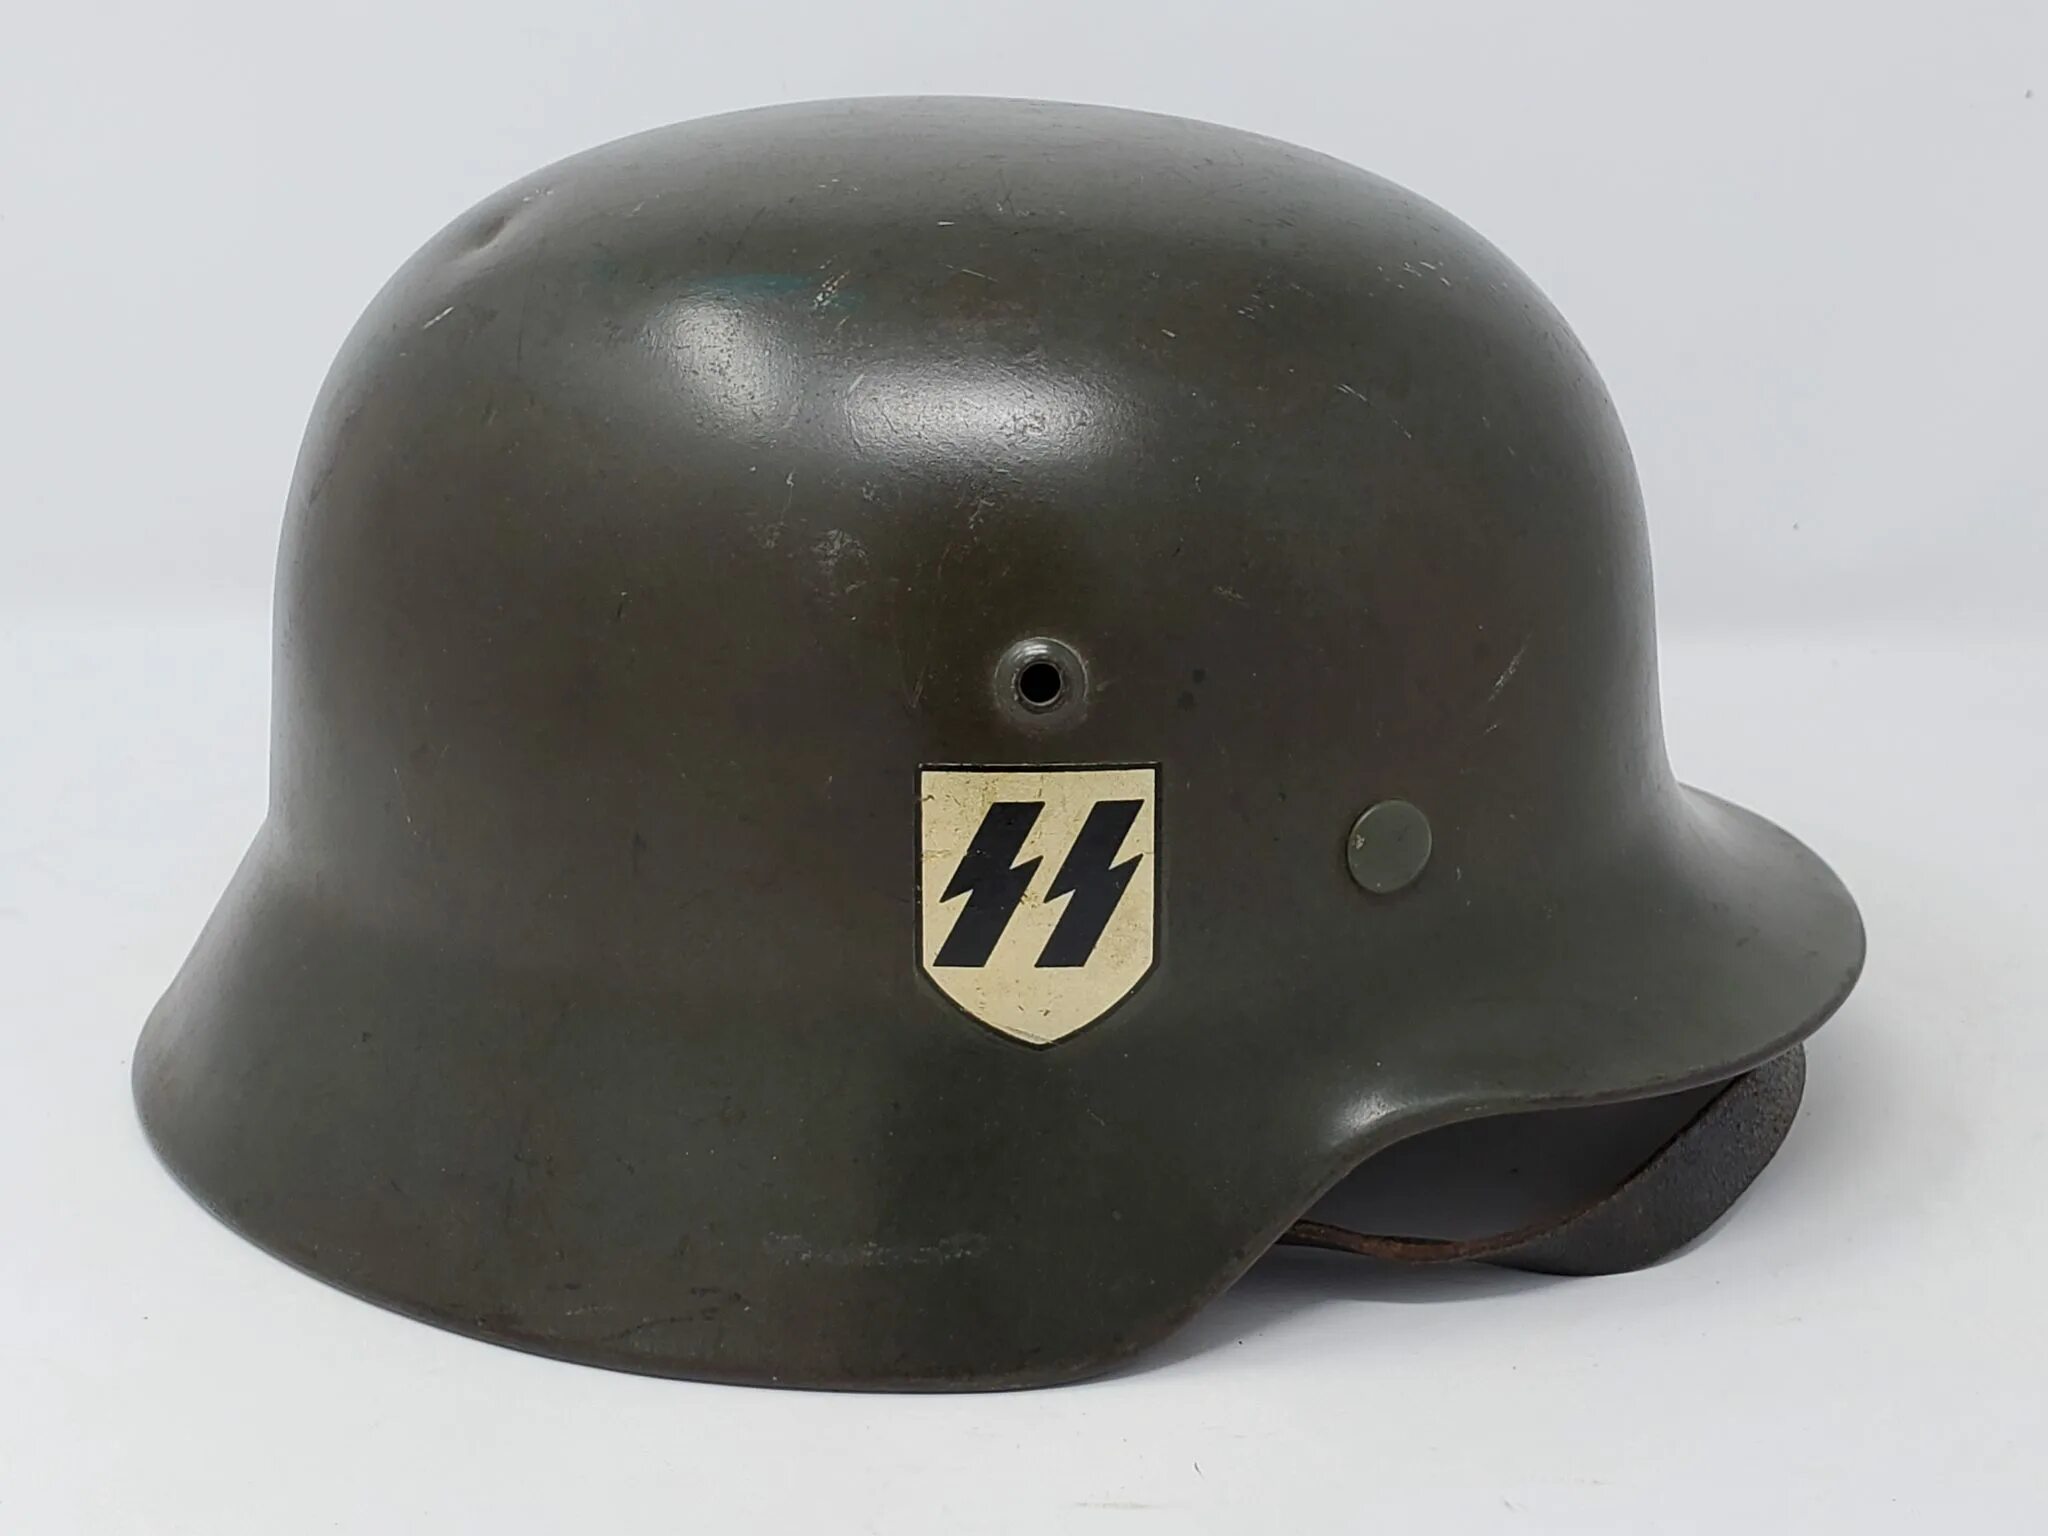 Stahlhelm m1916. Stahlhelm m35 SS. Каска m35 СС. M40 Helmet.